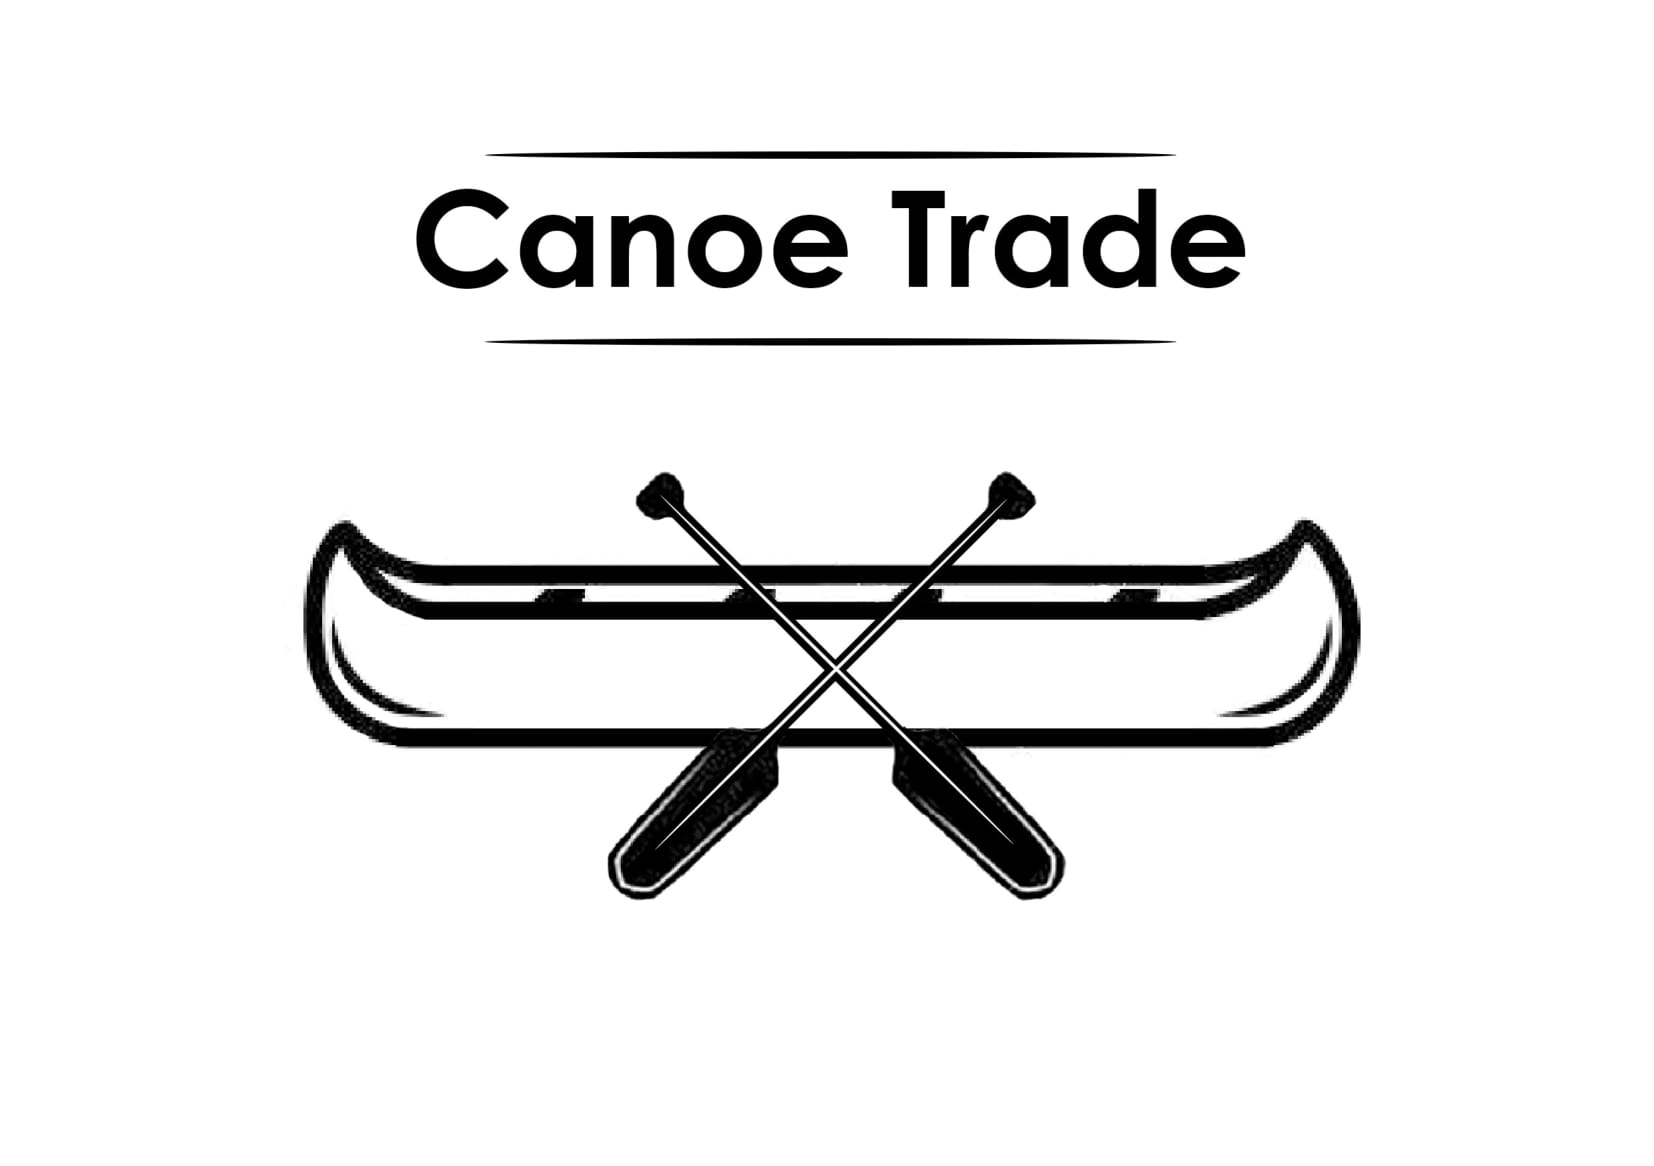 CanoeTrade